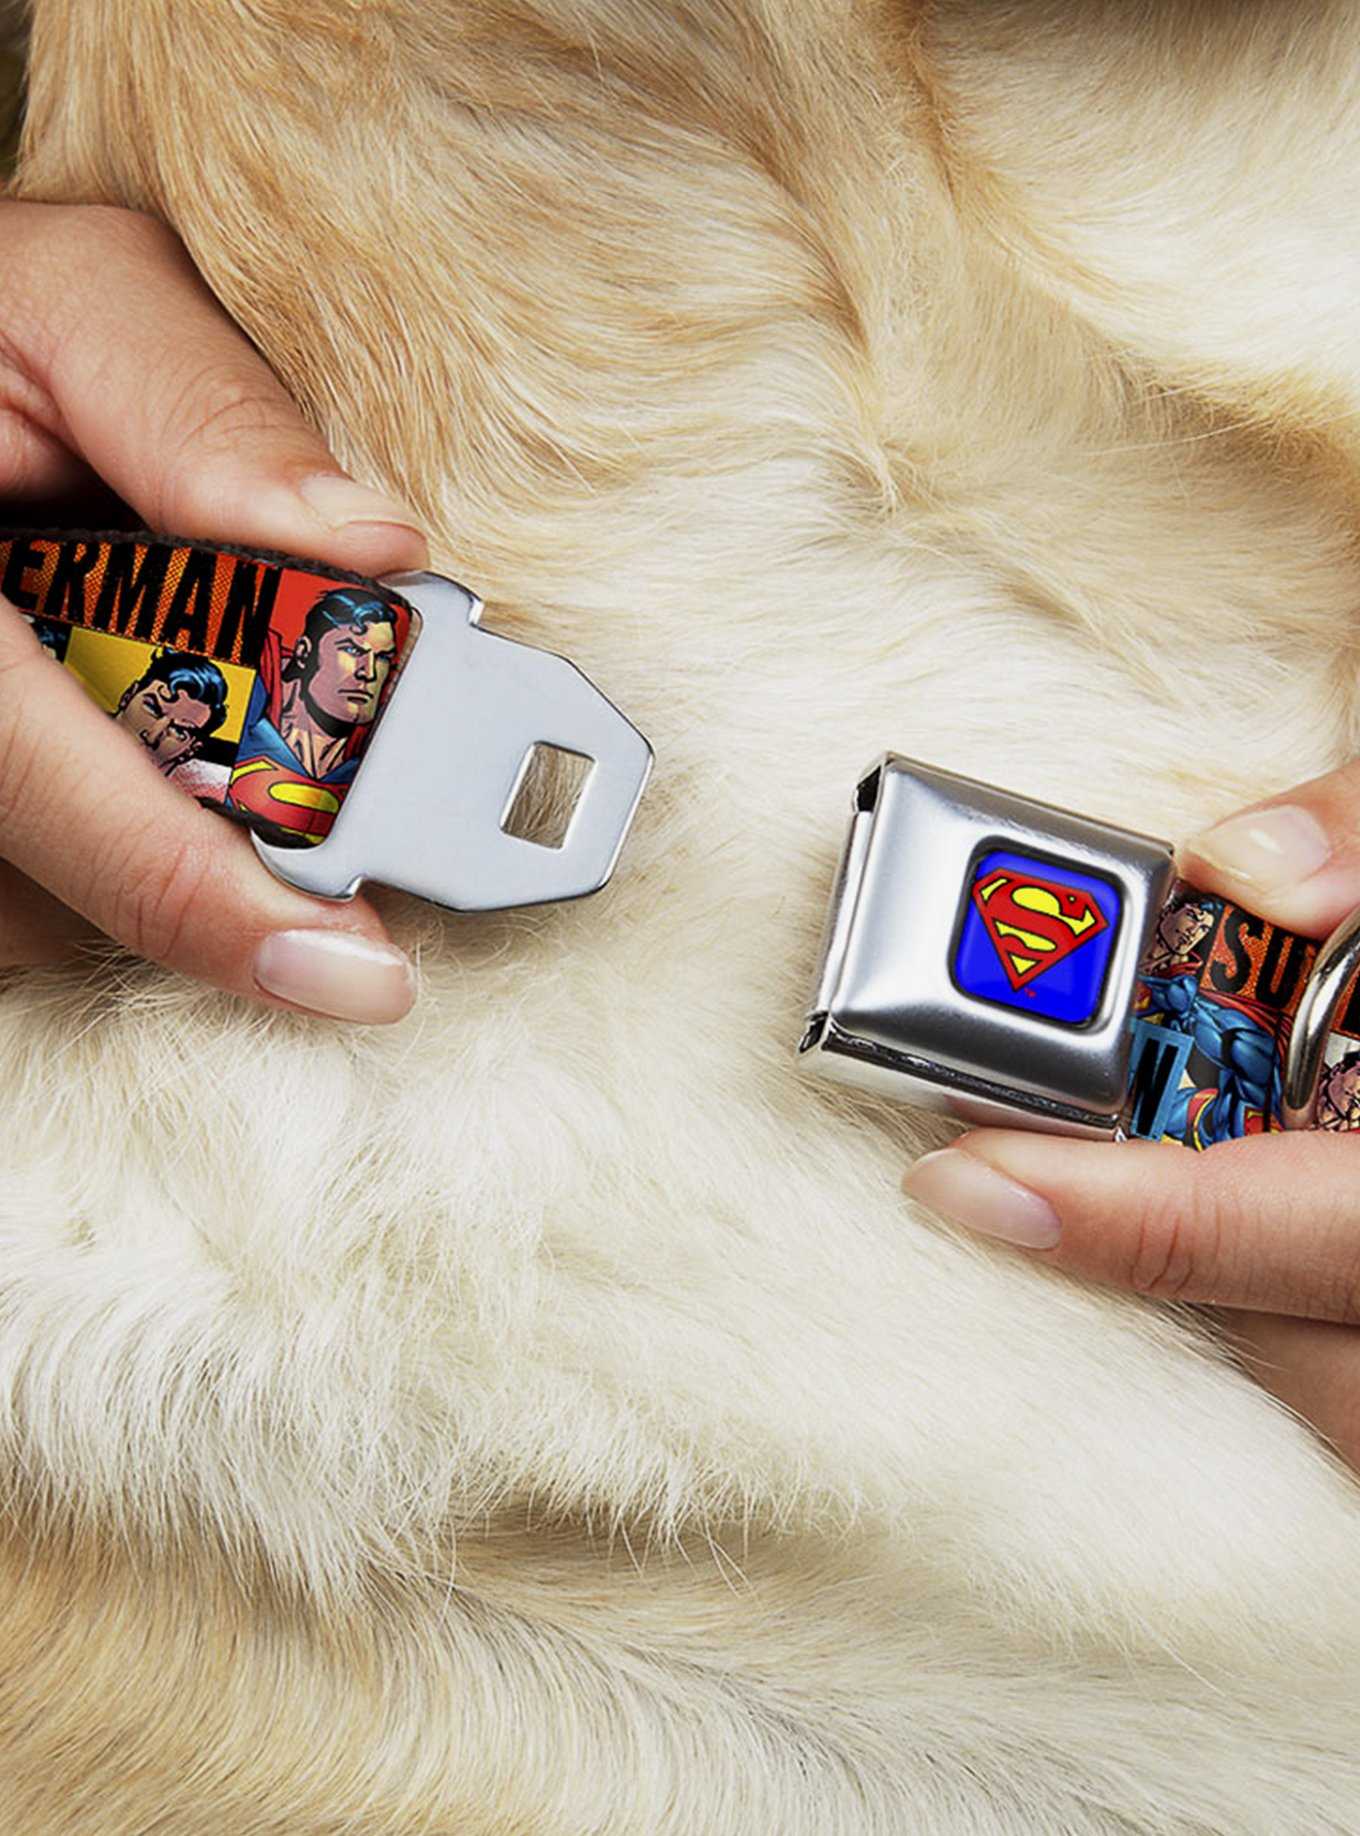 DC Comics Justice League Superman Action Blocks Seatbelt Buckle Dog Collar, , hi-res